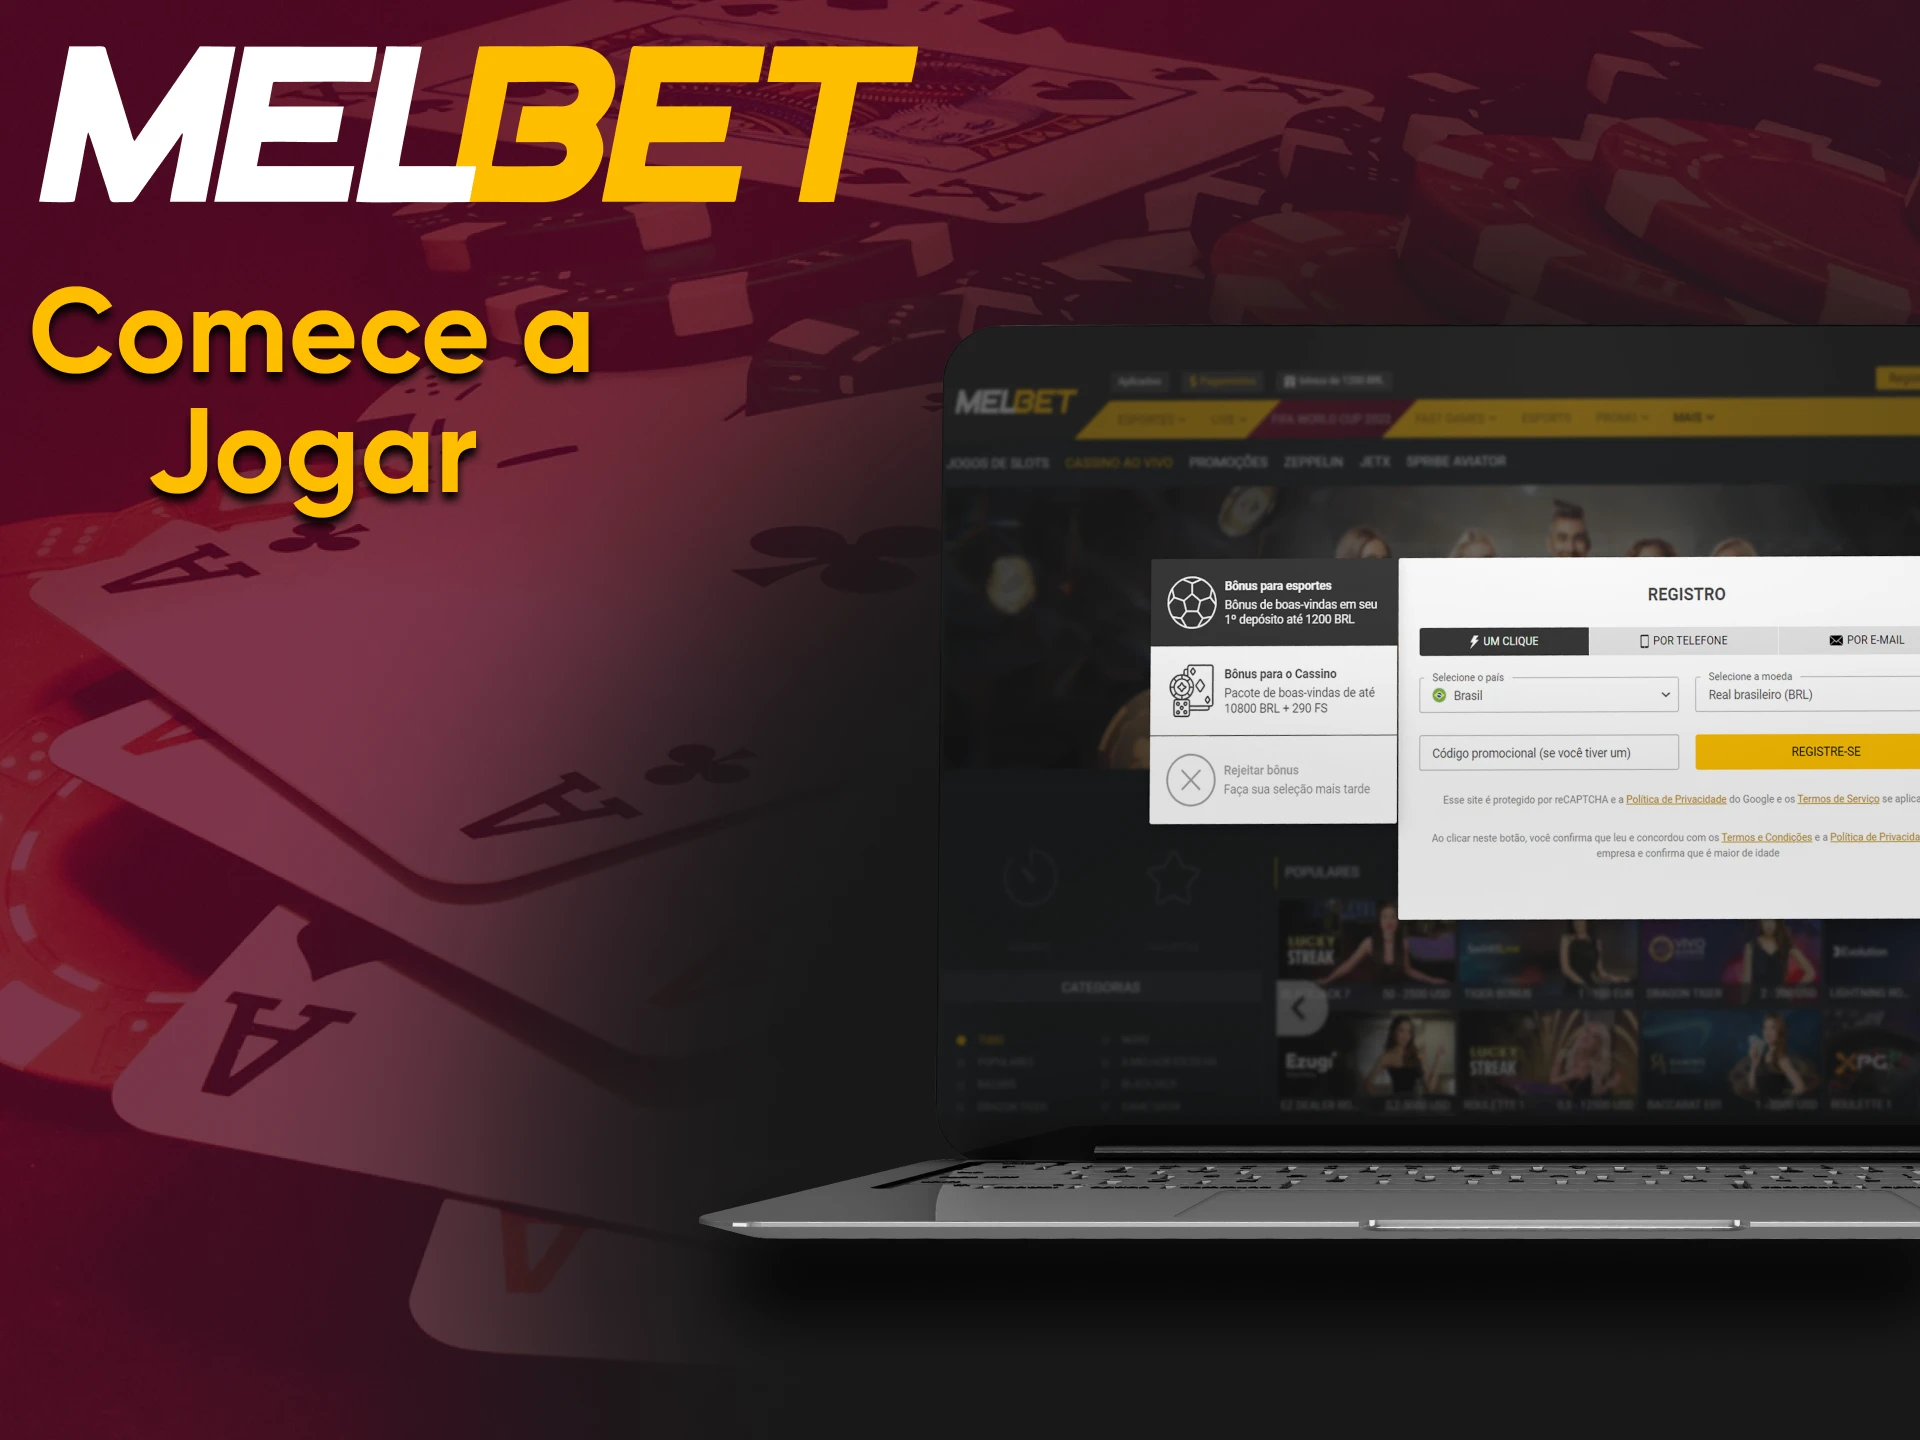 The Melbet website has an online casino.